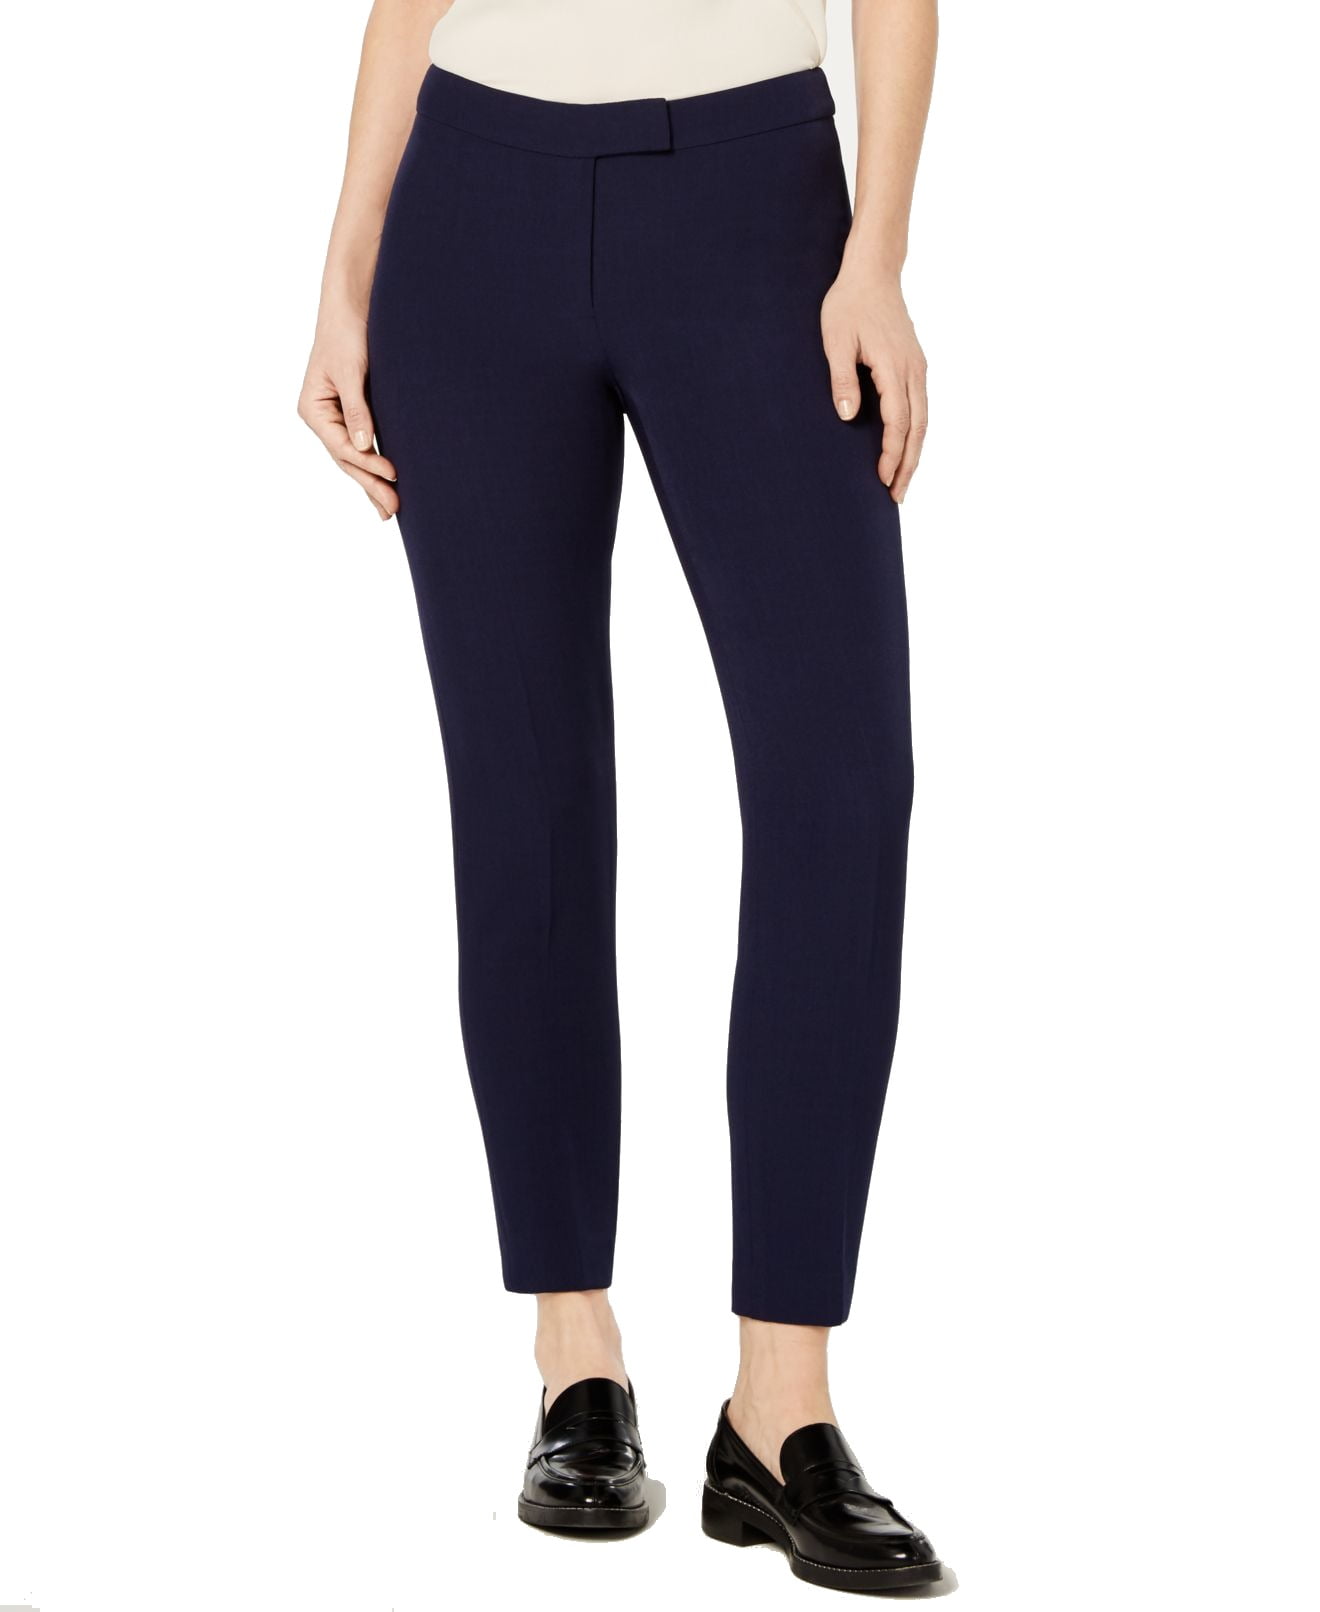 Ann Taylor Dress Pants|high Waist Pencil Pants For Women - Slim Fit Office  Ankle-length Trousers